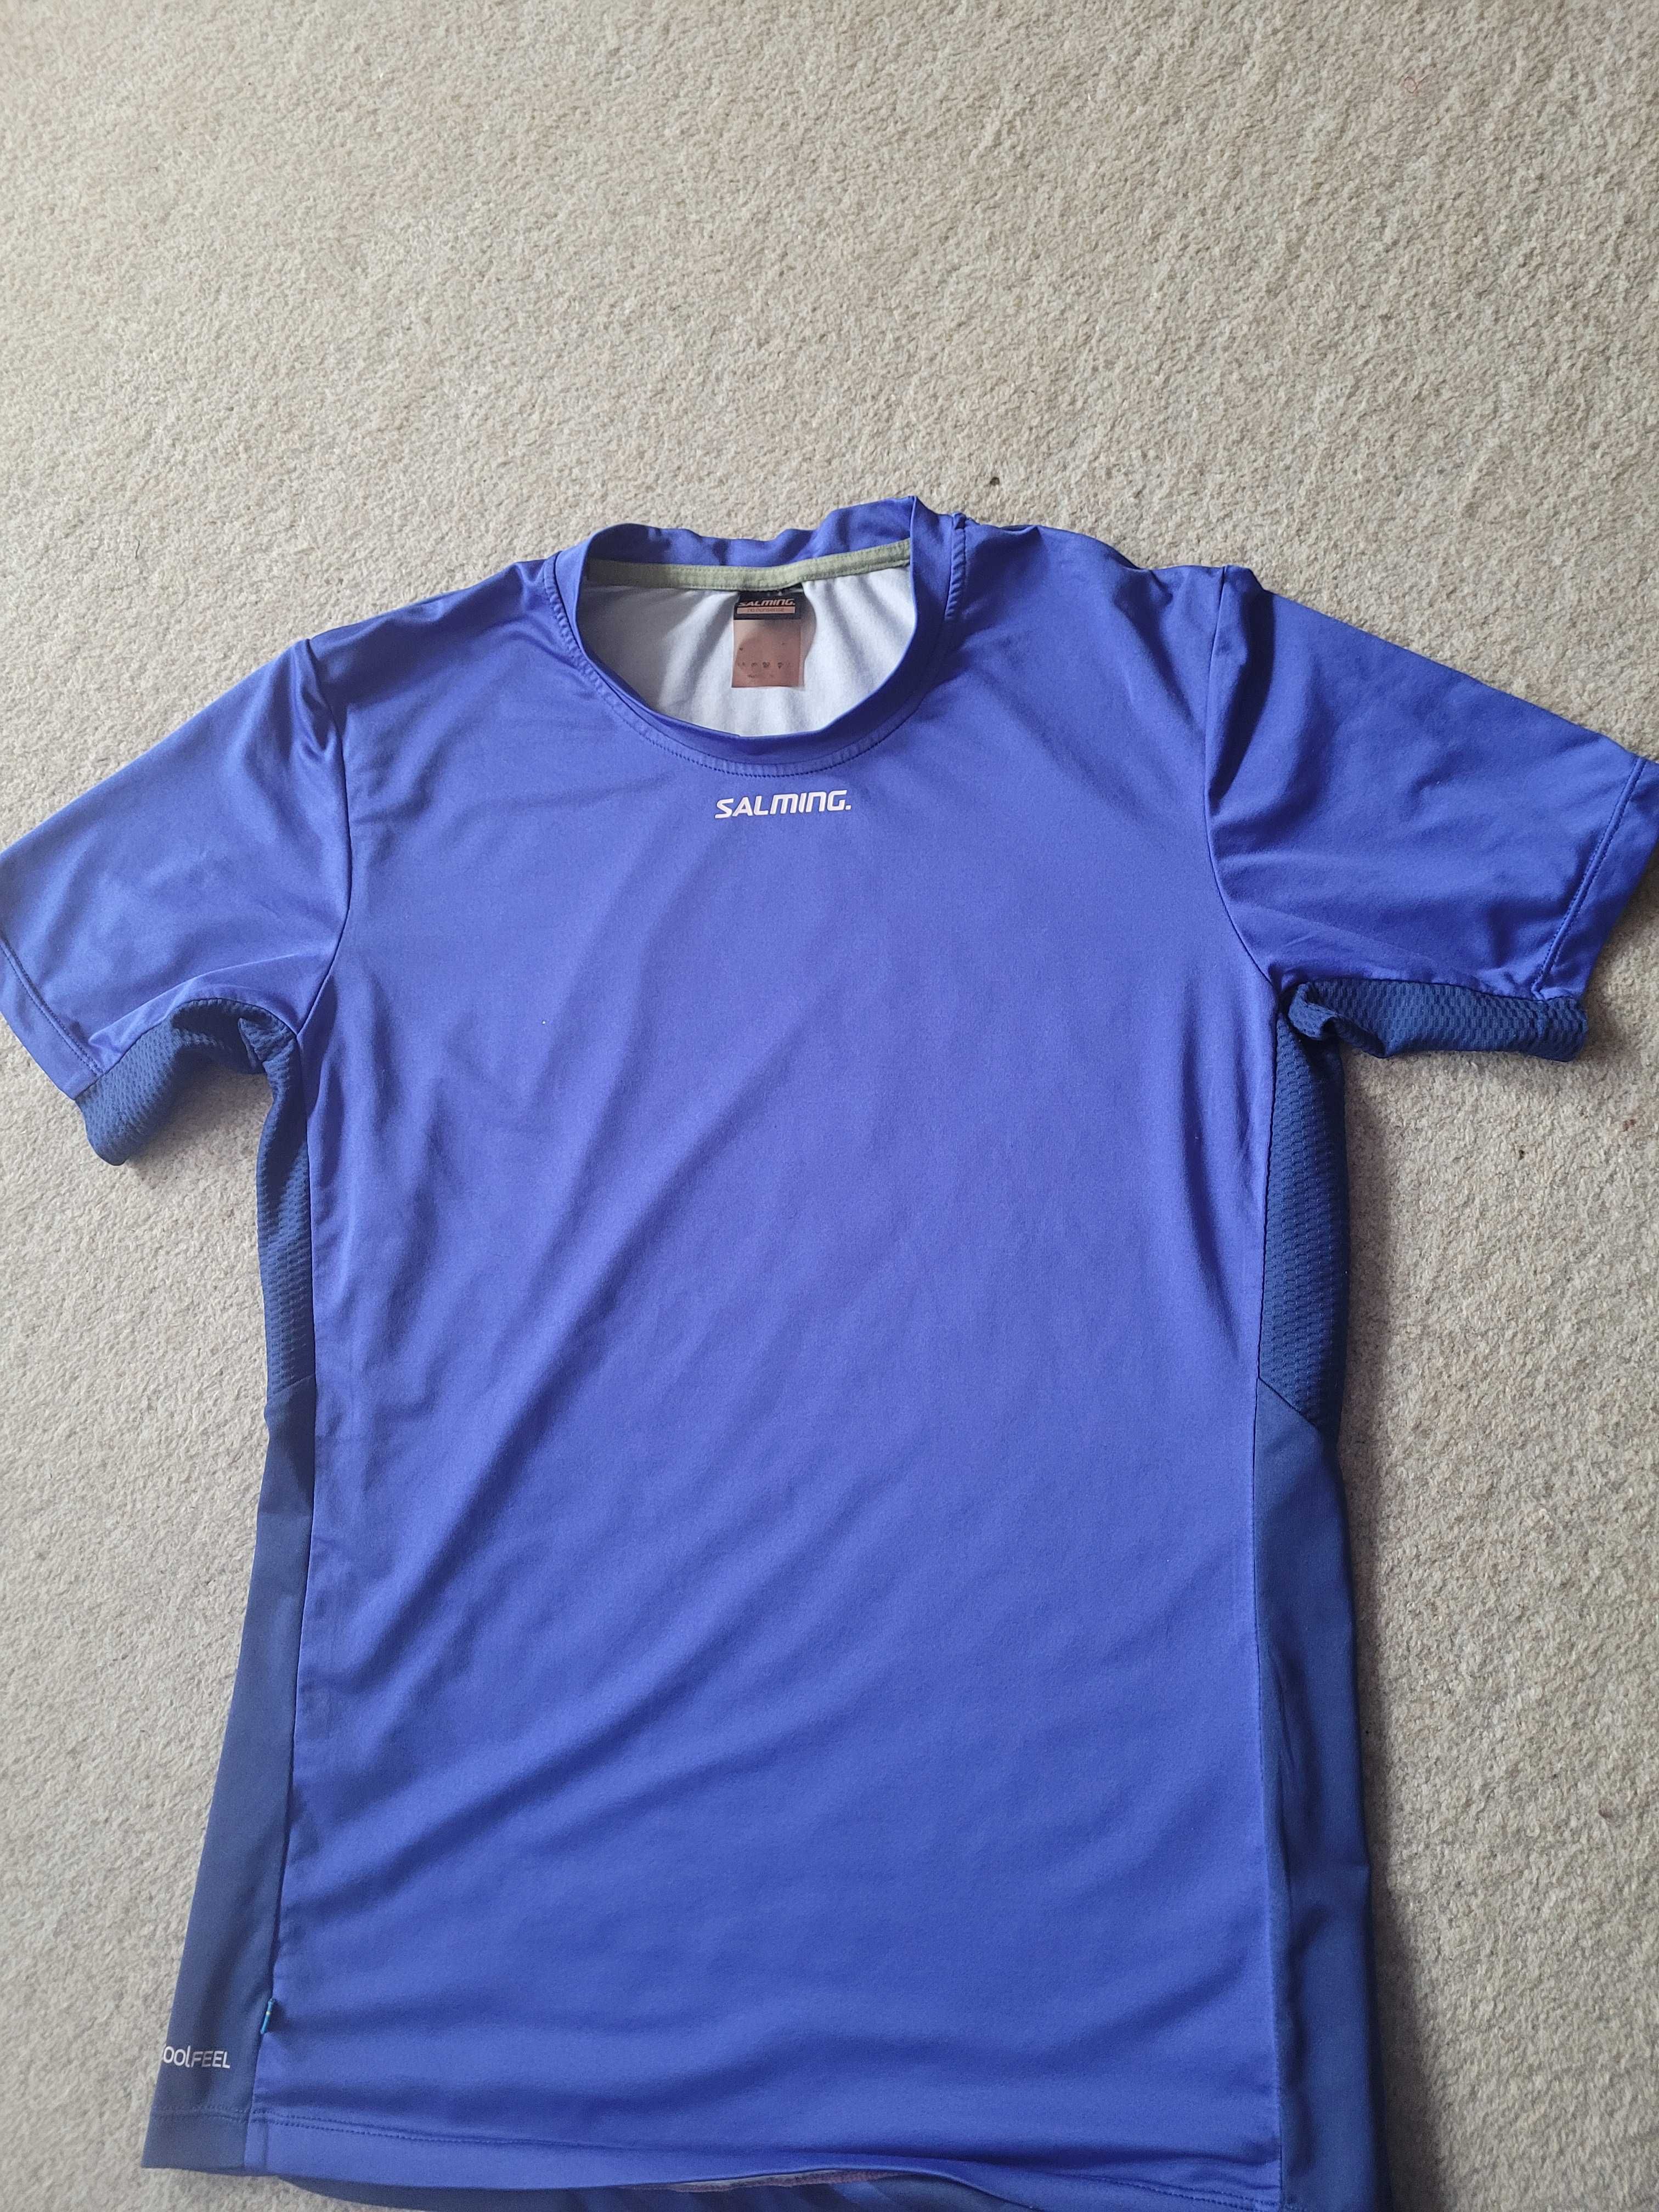 Salming koszulka bluzka treningowa sportowa s